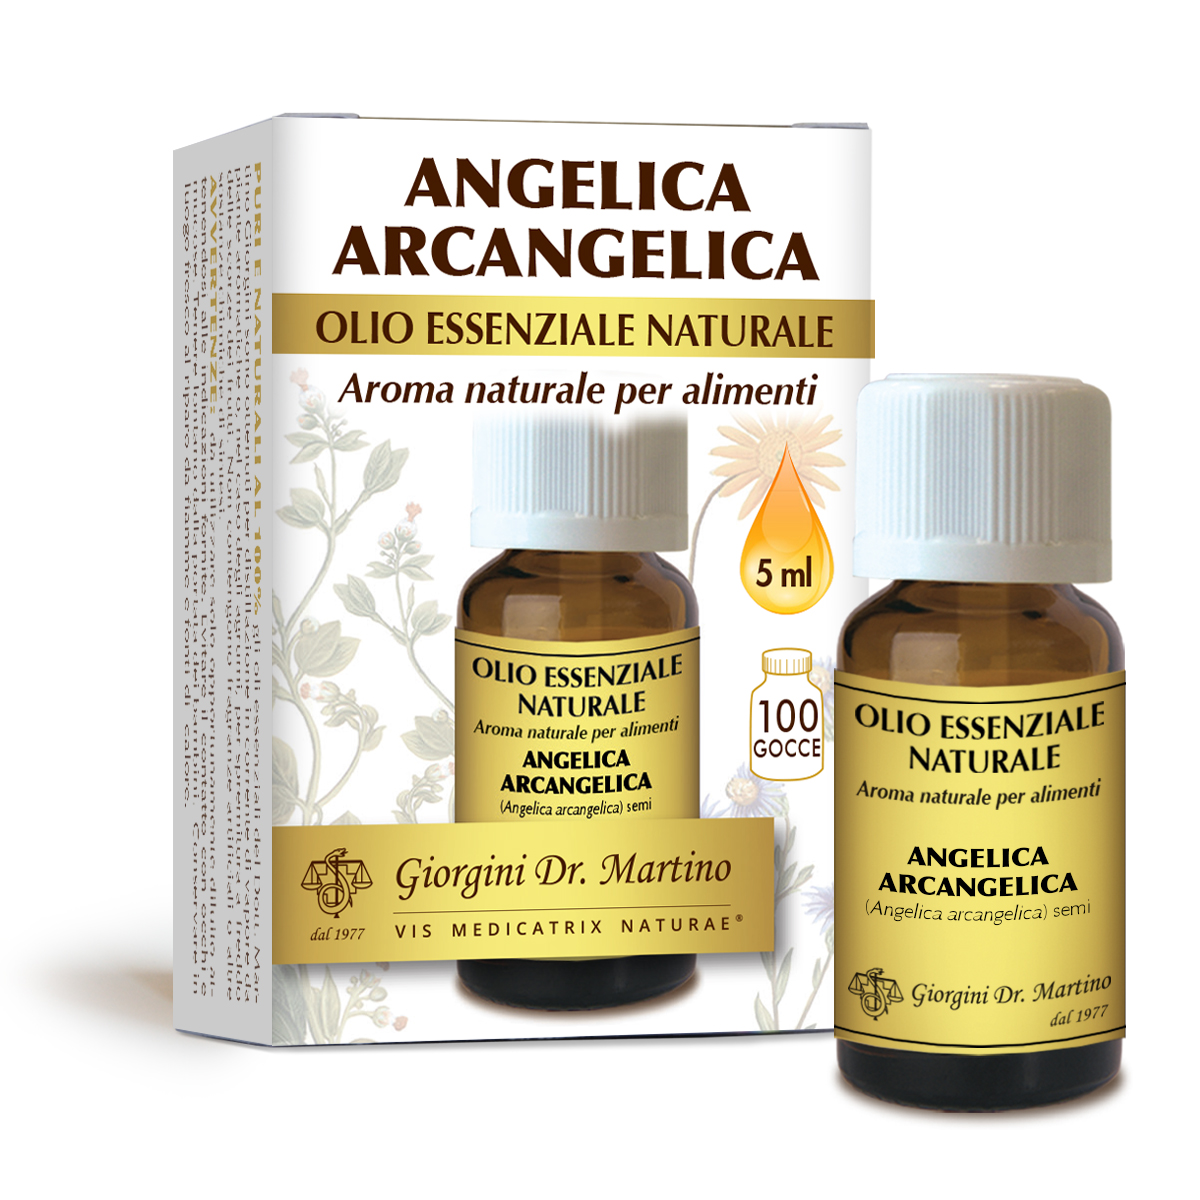 ANGELICA ARCANGELICA aceite esencial natural 5 ml